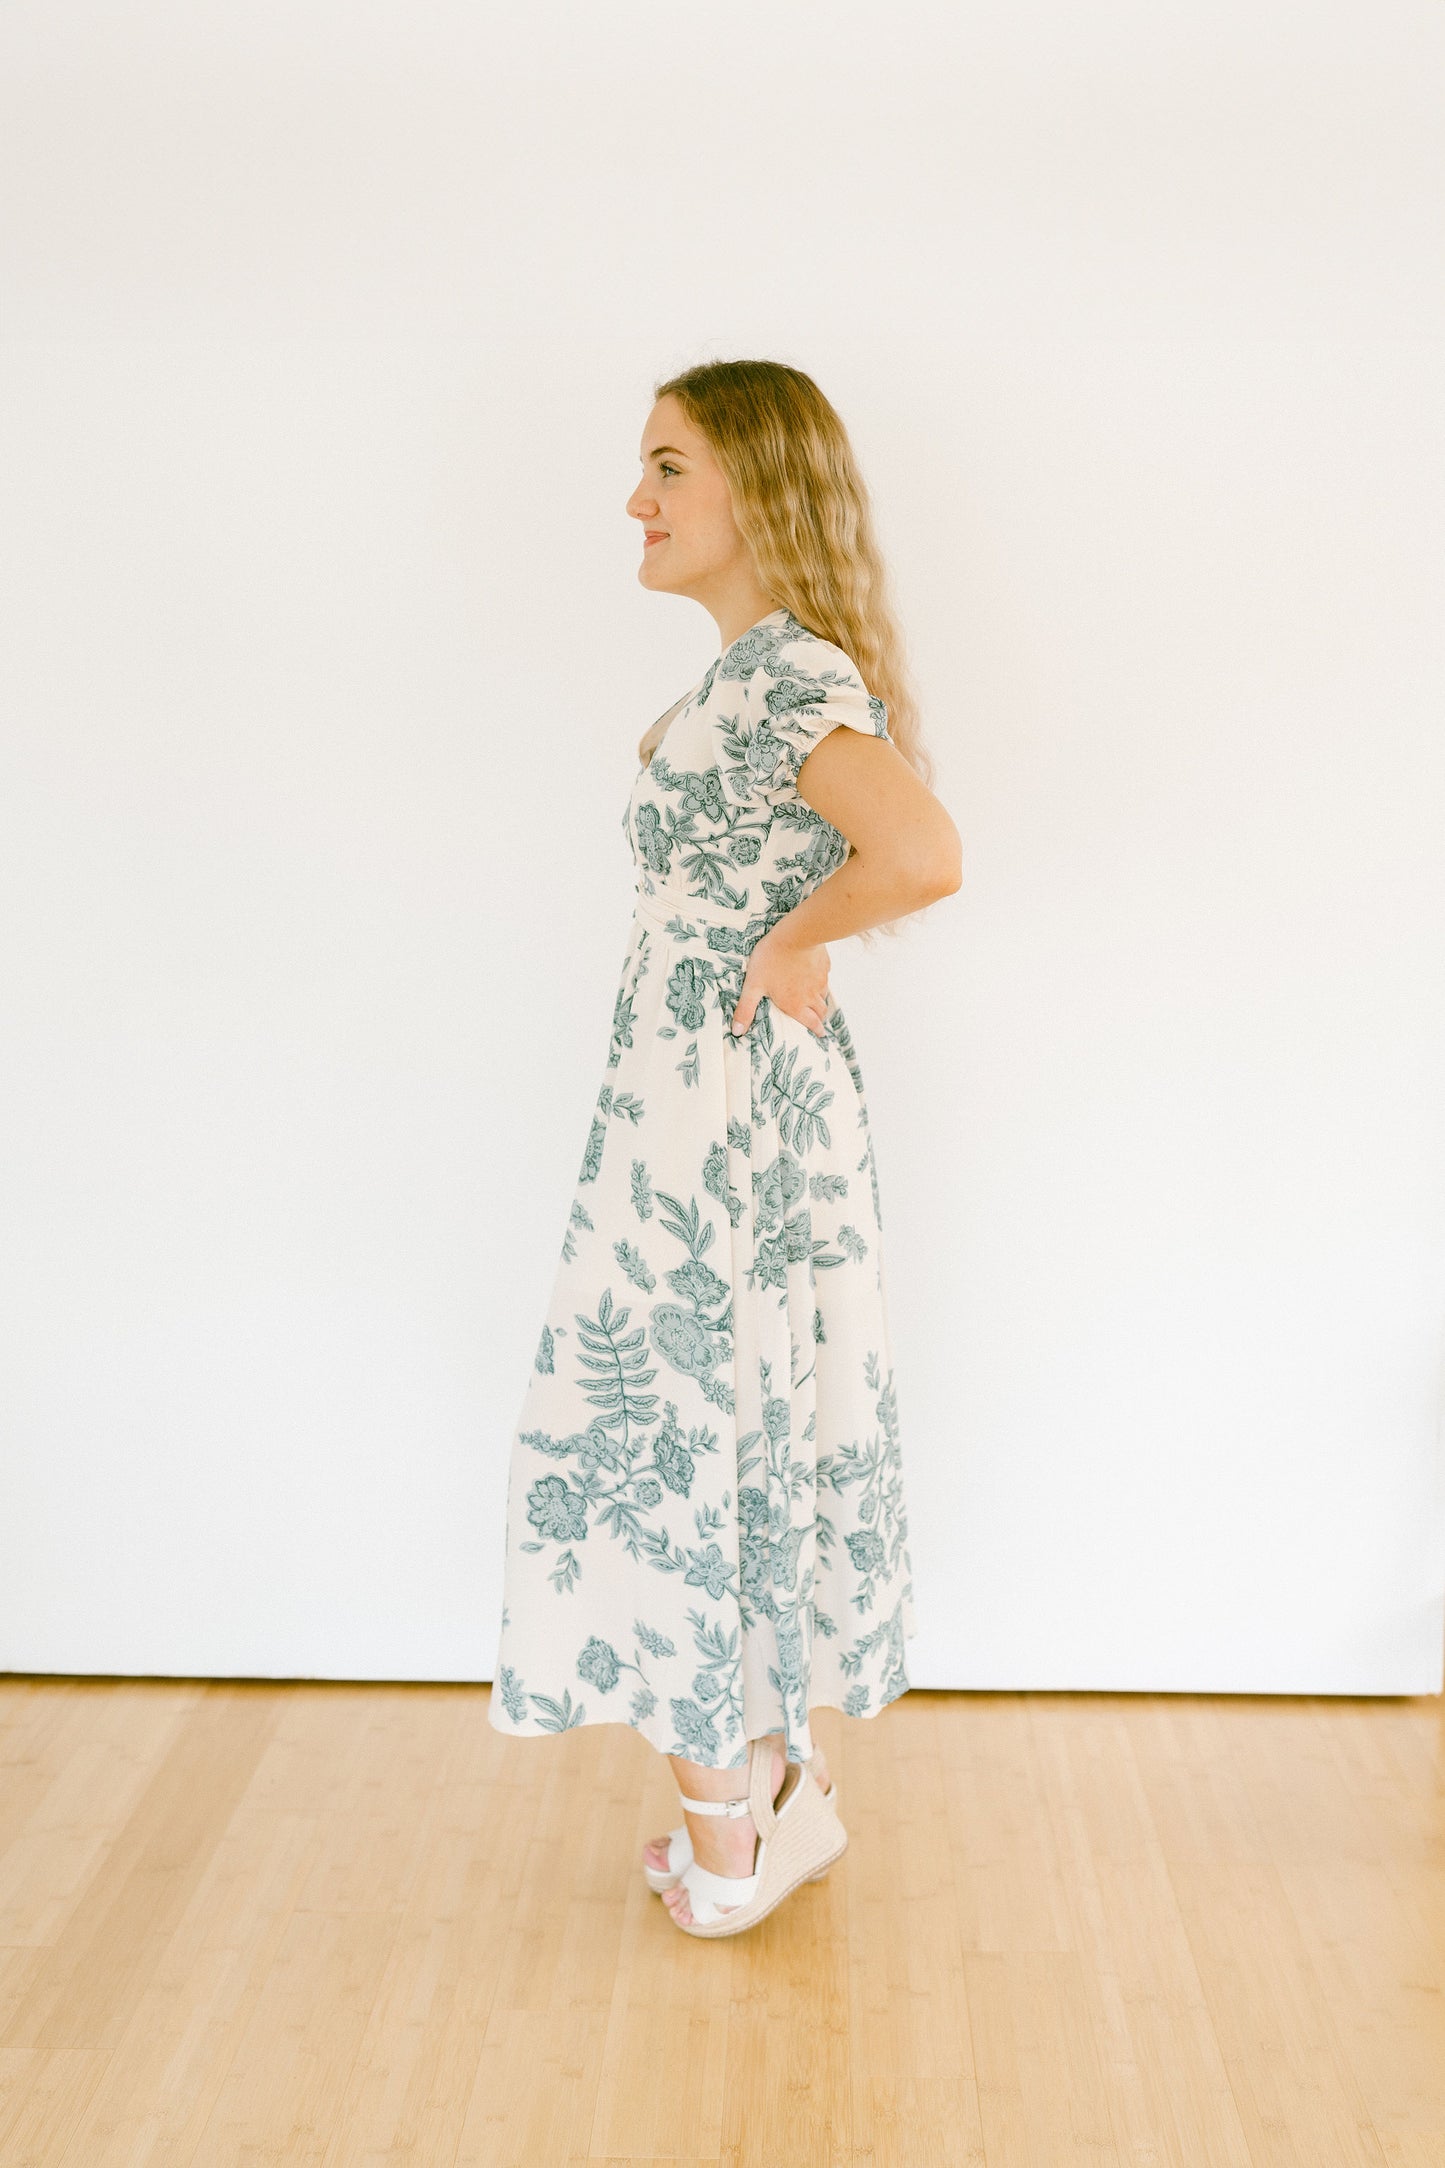 Eloise Teal Blossom Dress